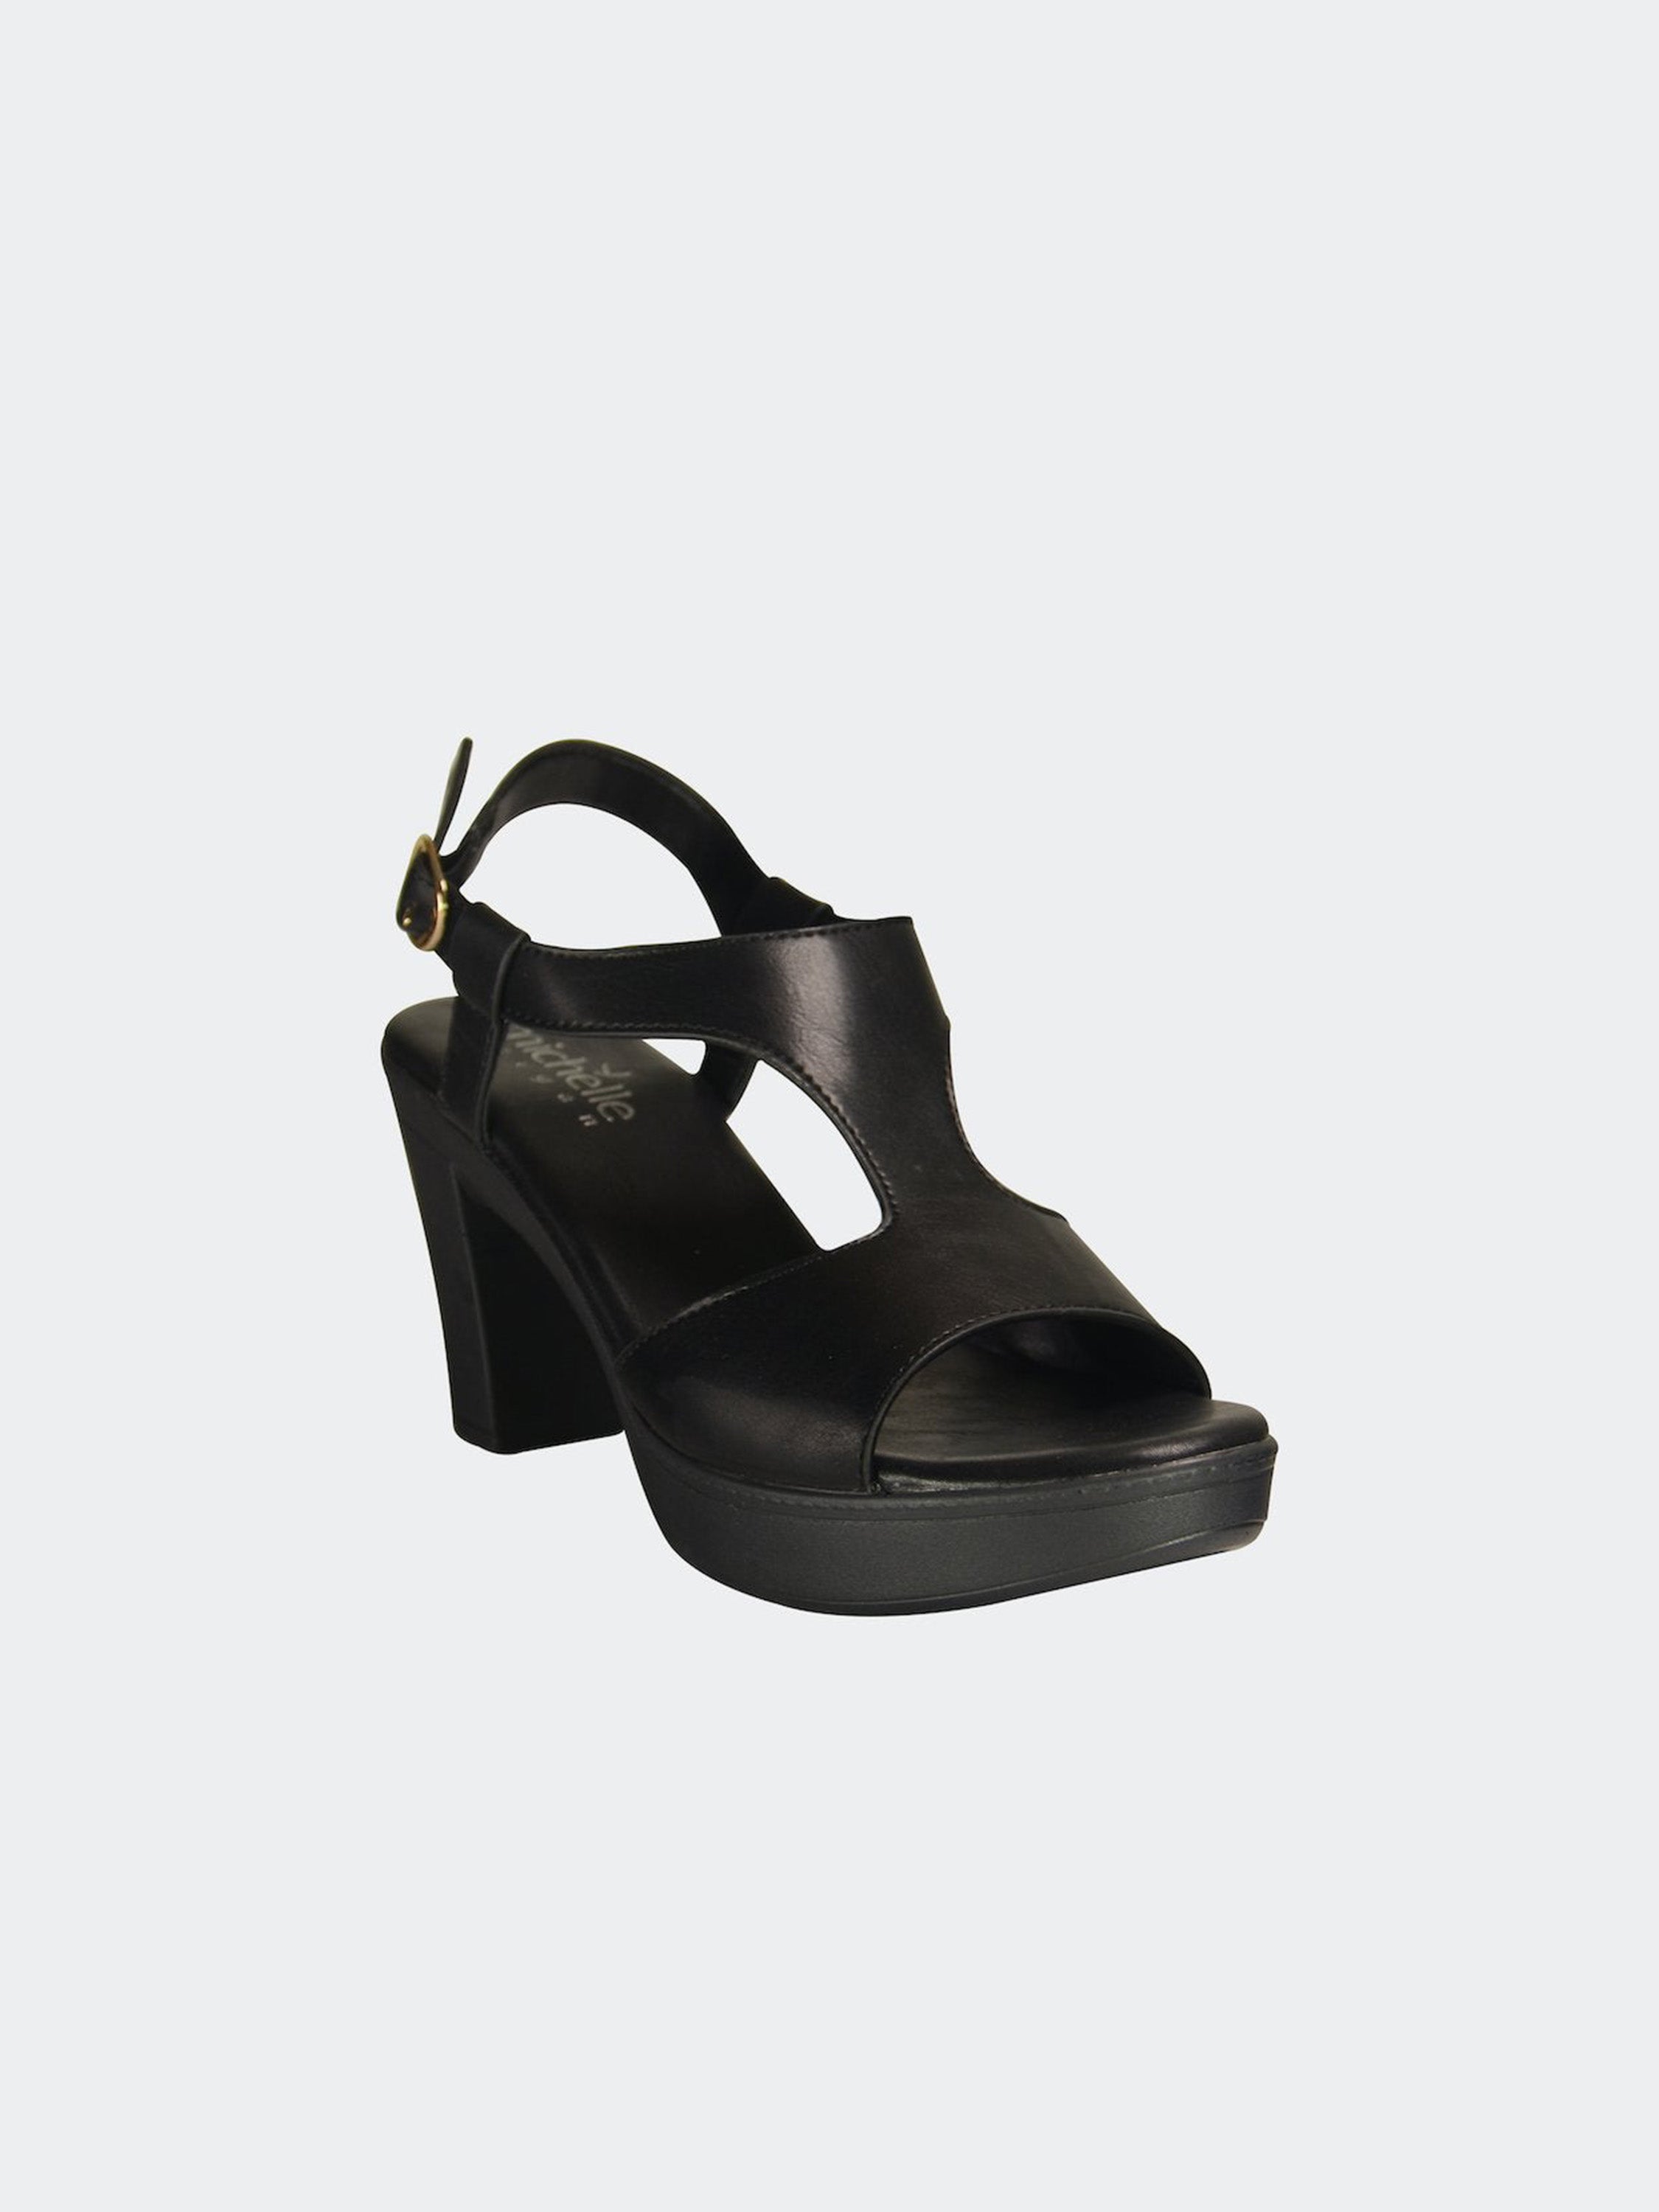 Michelle Morgan 914RJY72 Women's Heeled Sandals #color_Black